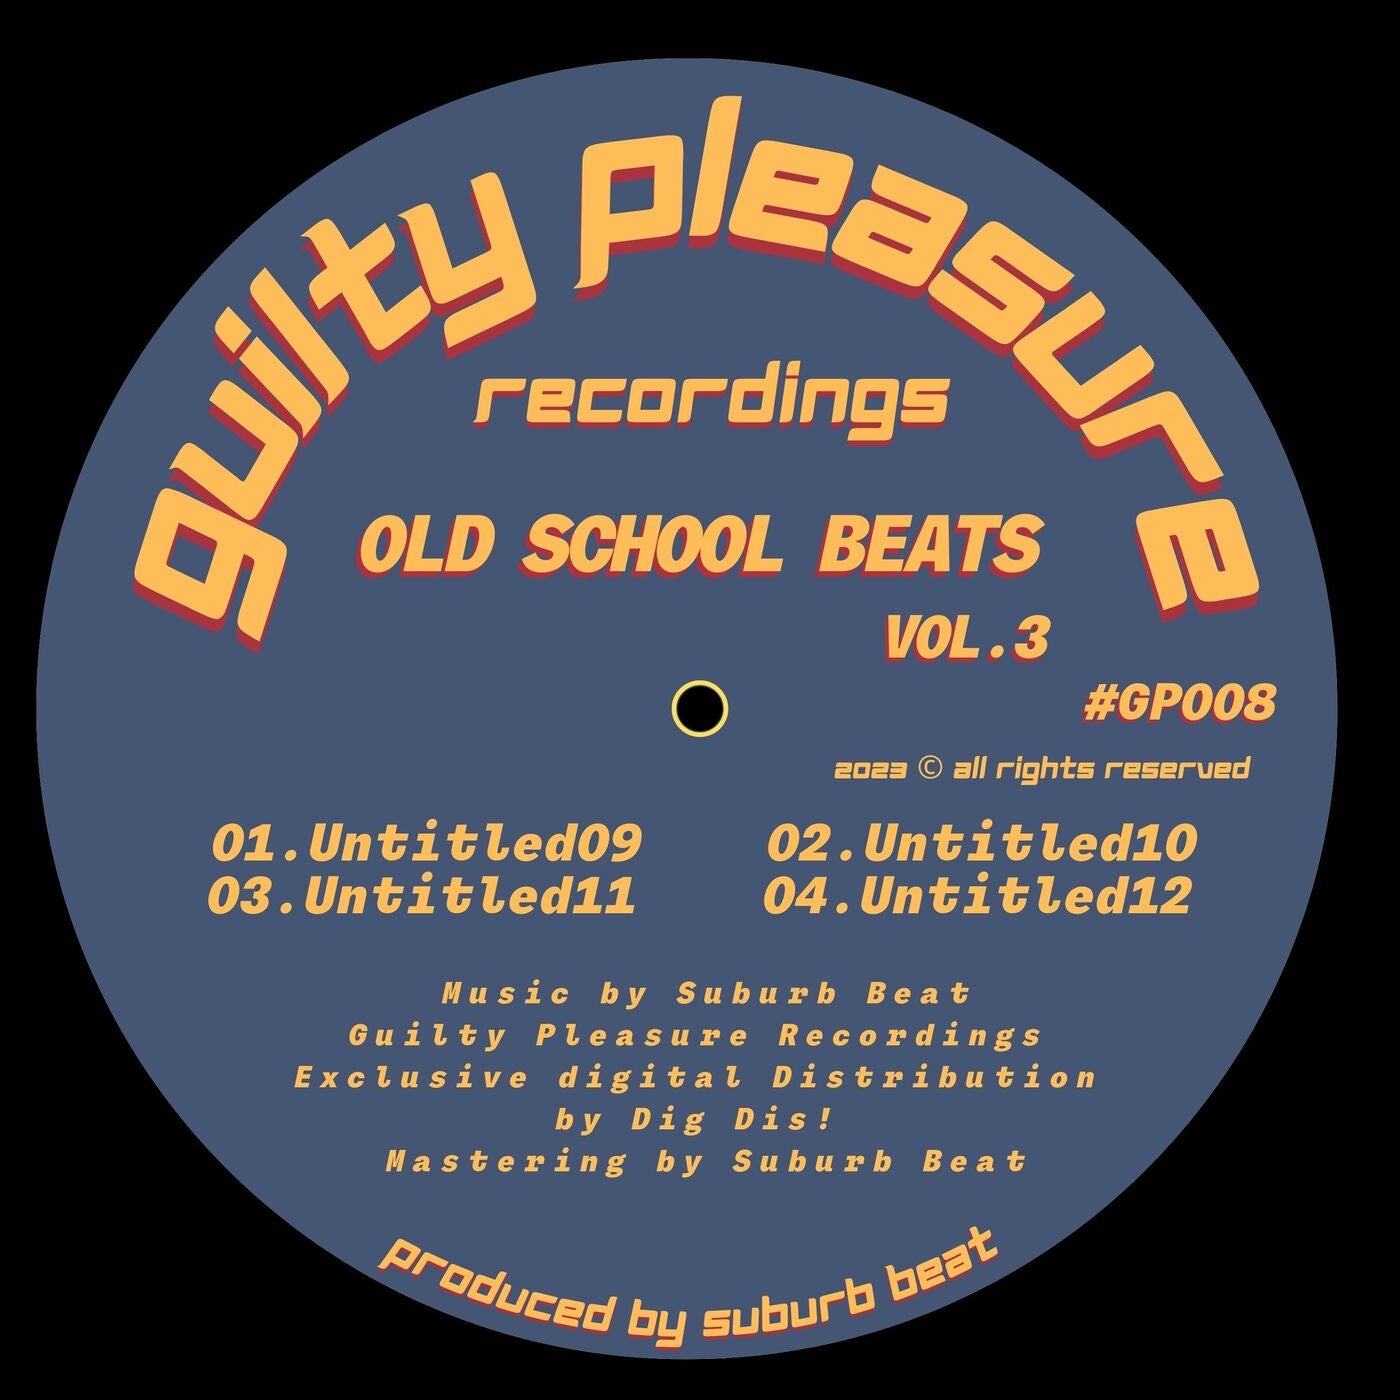 Suburb Beat - Old School Beats, Vol. 3 on Guilty Pleasure Recordings